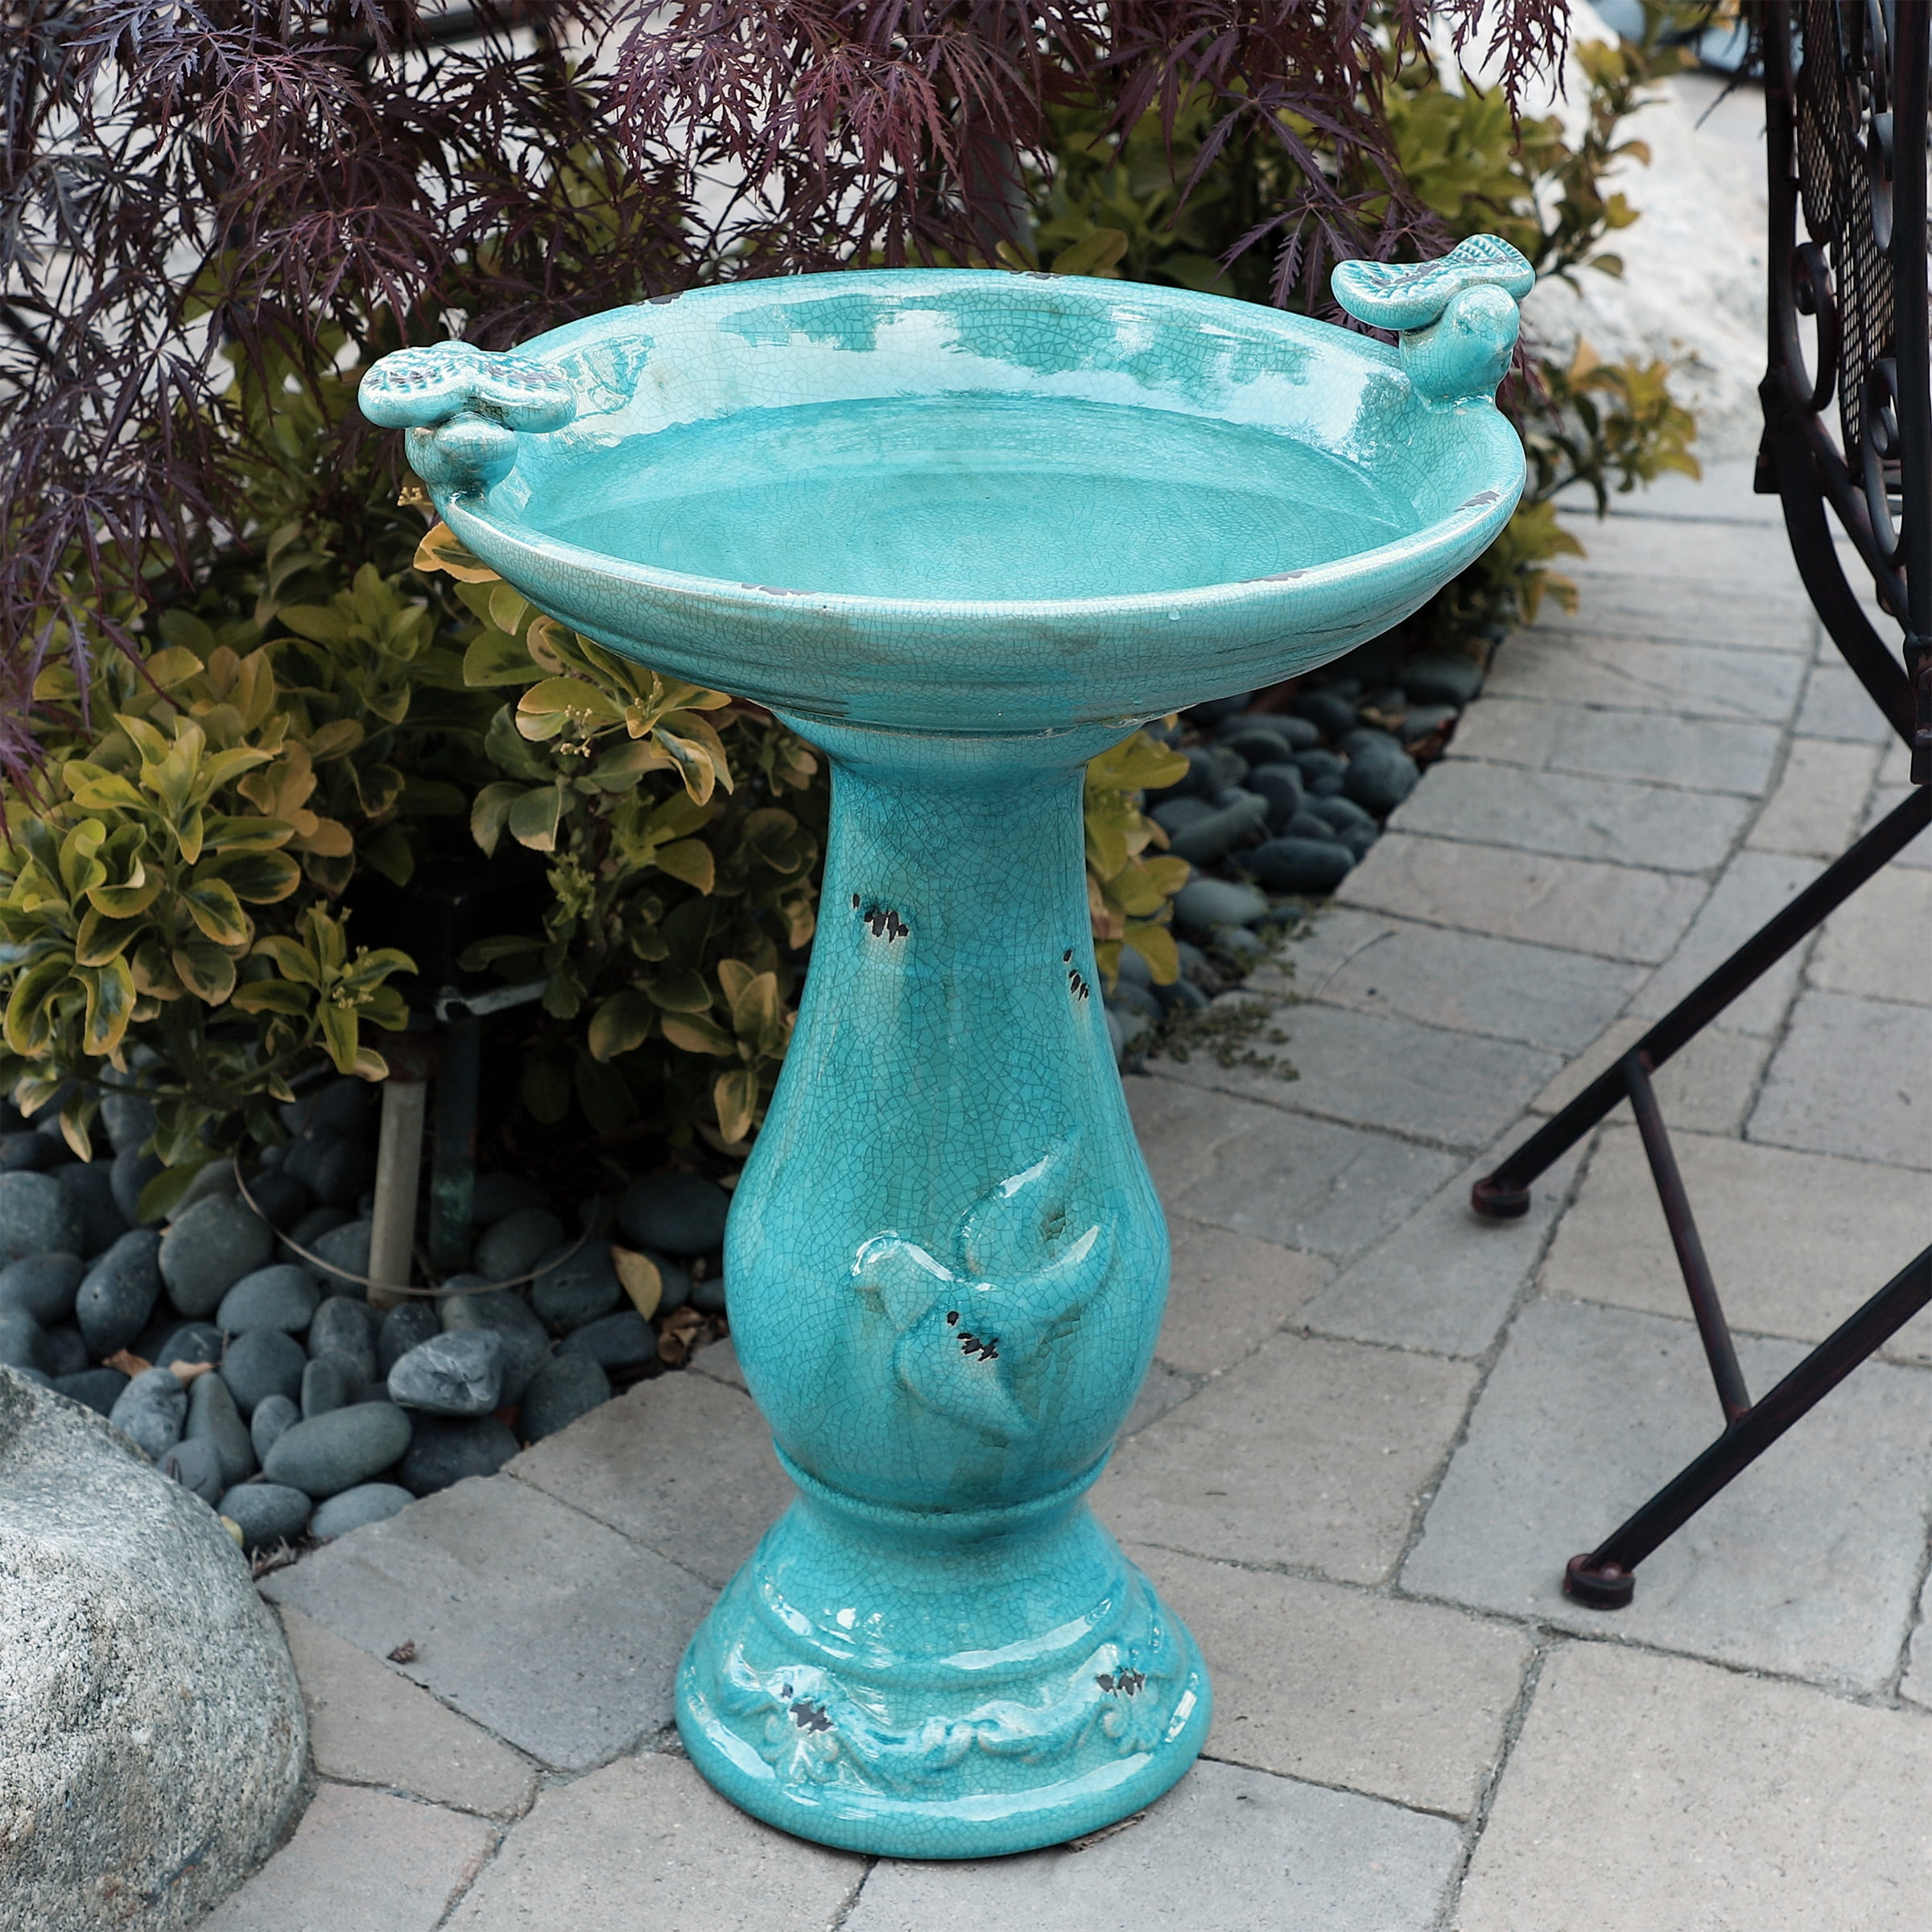 Bird Bath Decorative Bowl Feeder Solar Lighted Antique Bronze Garden Outdoor New 